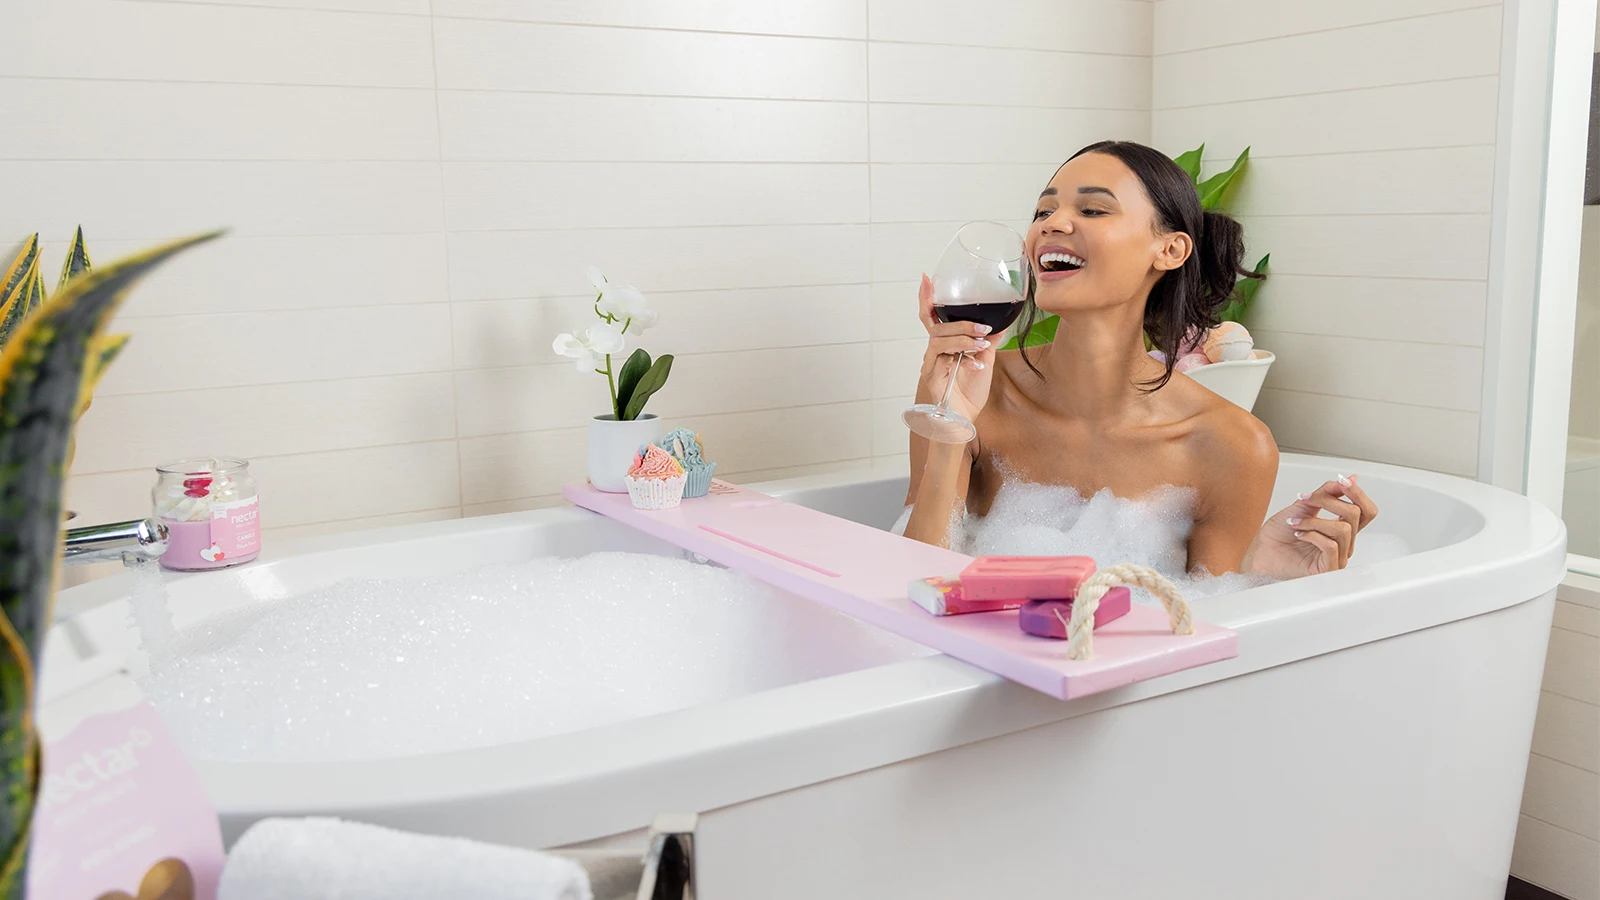 A woman in a pink bath tub drinking wine.